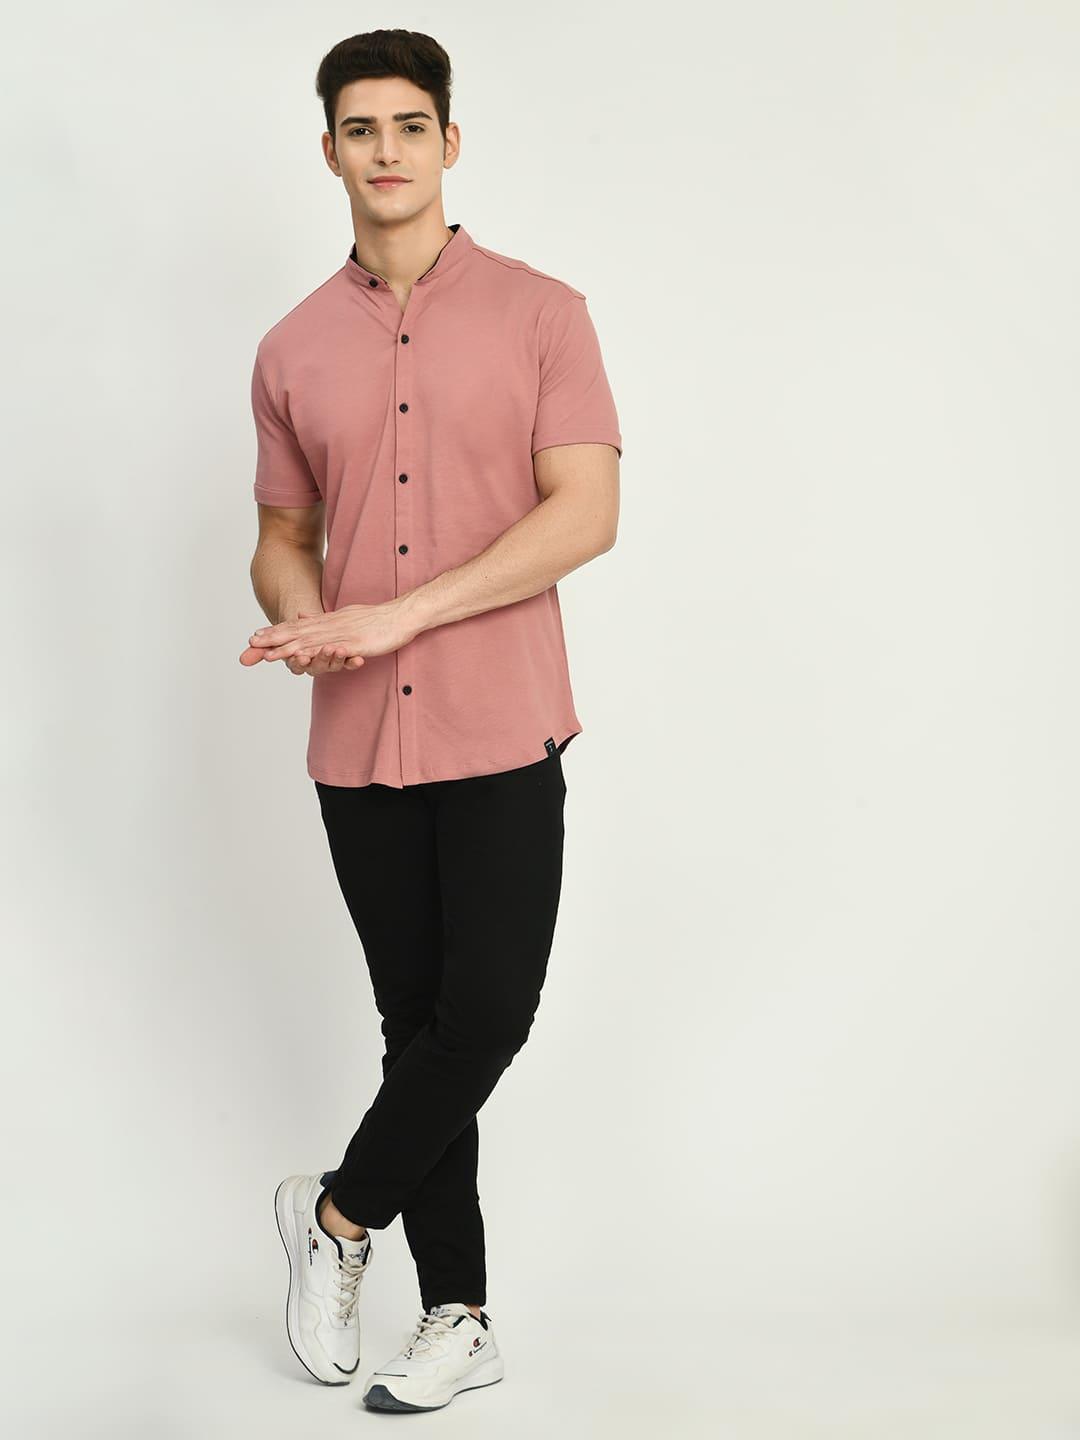 Men's Solid Dark Pink Mandarin Collar Shirt